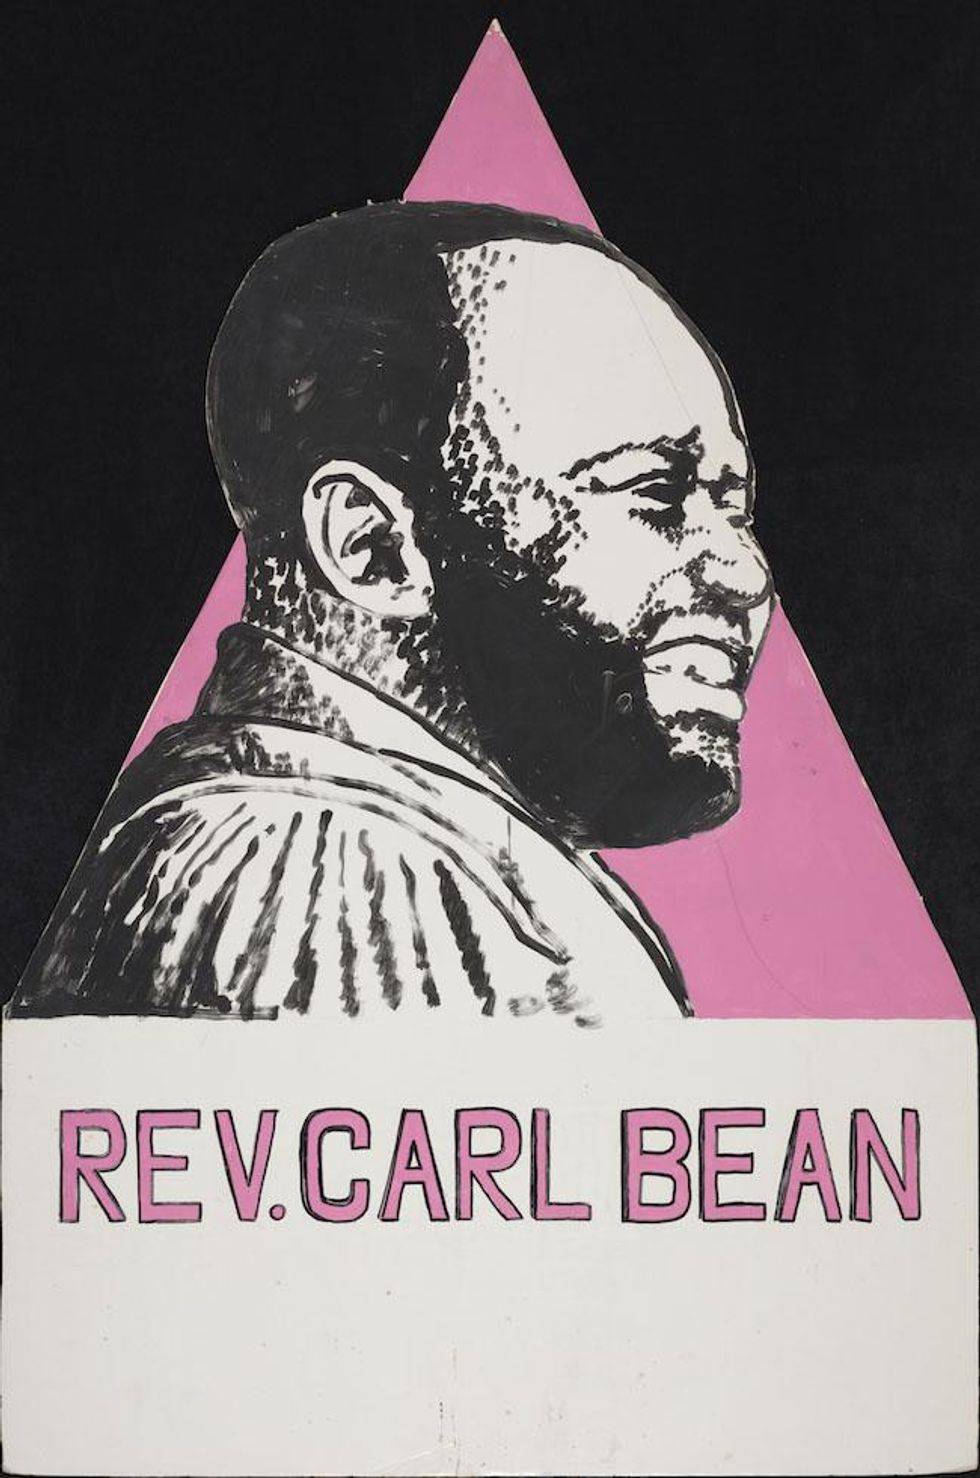 Rev. Carl Bean. 1989.